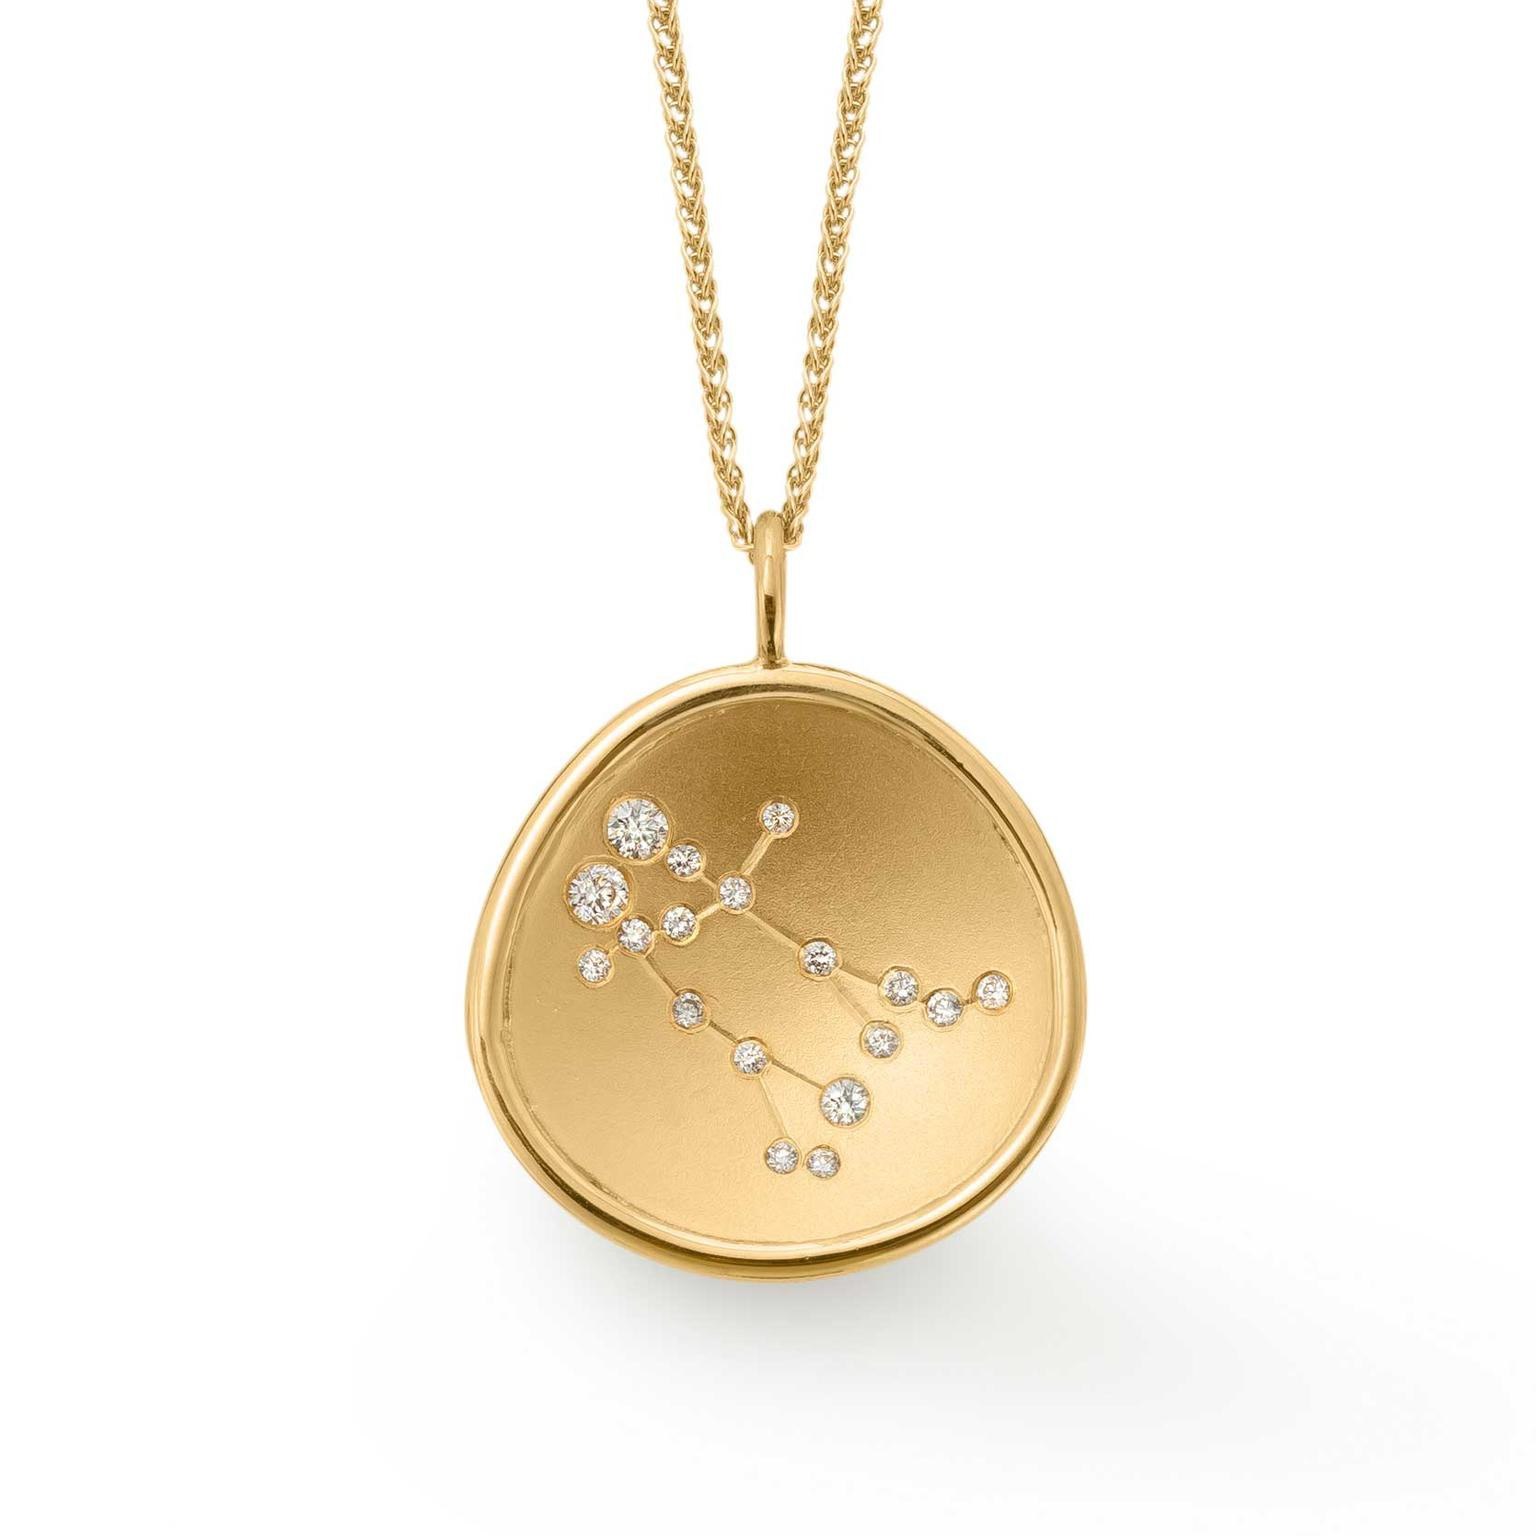 Gemini Constellation Necklace
 Gemini Constellation diamond pendant in yellow gold